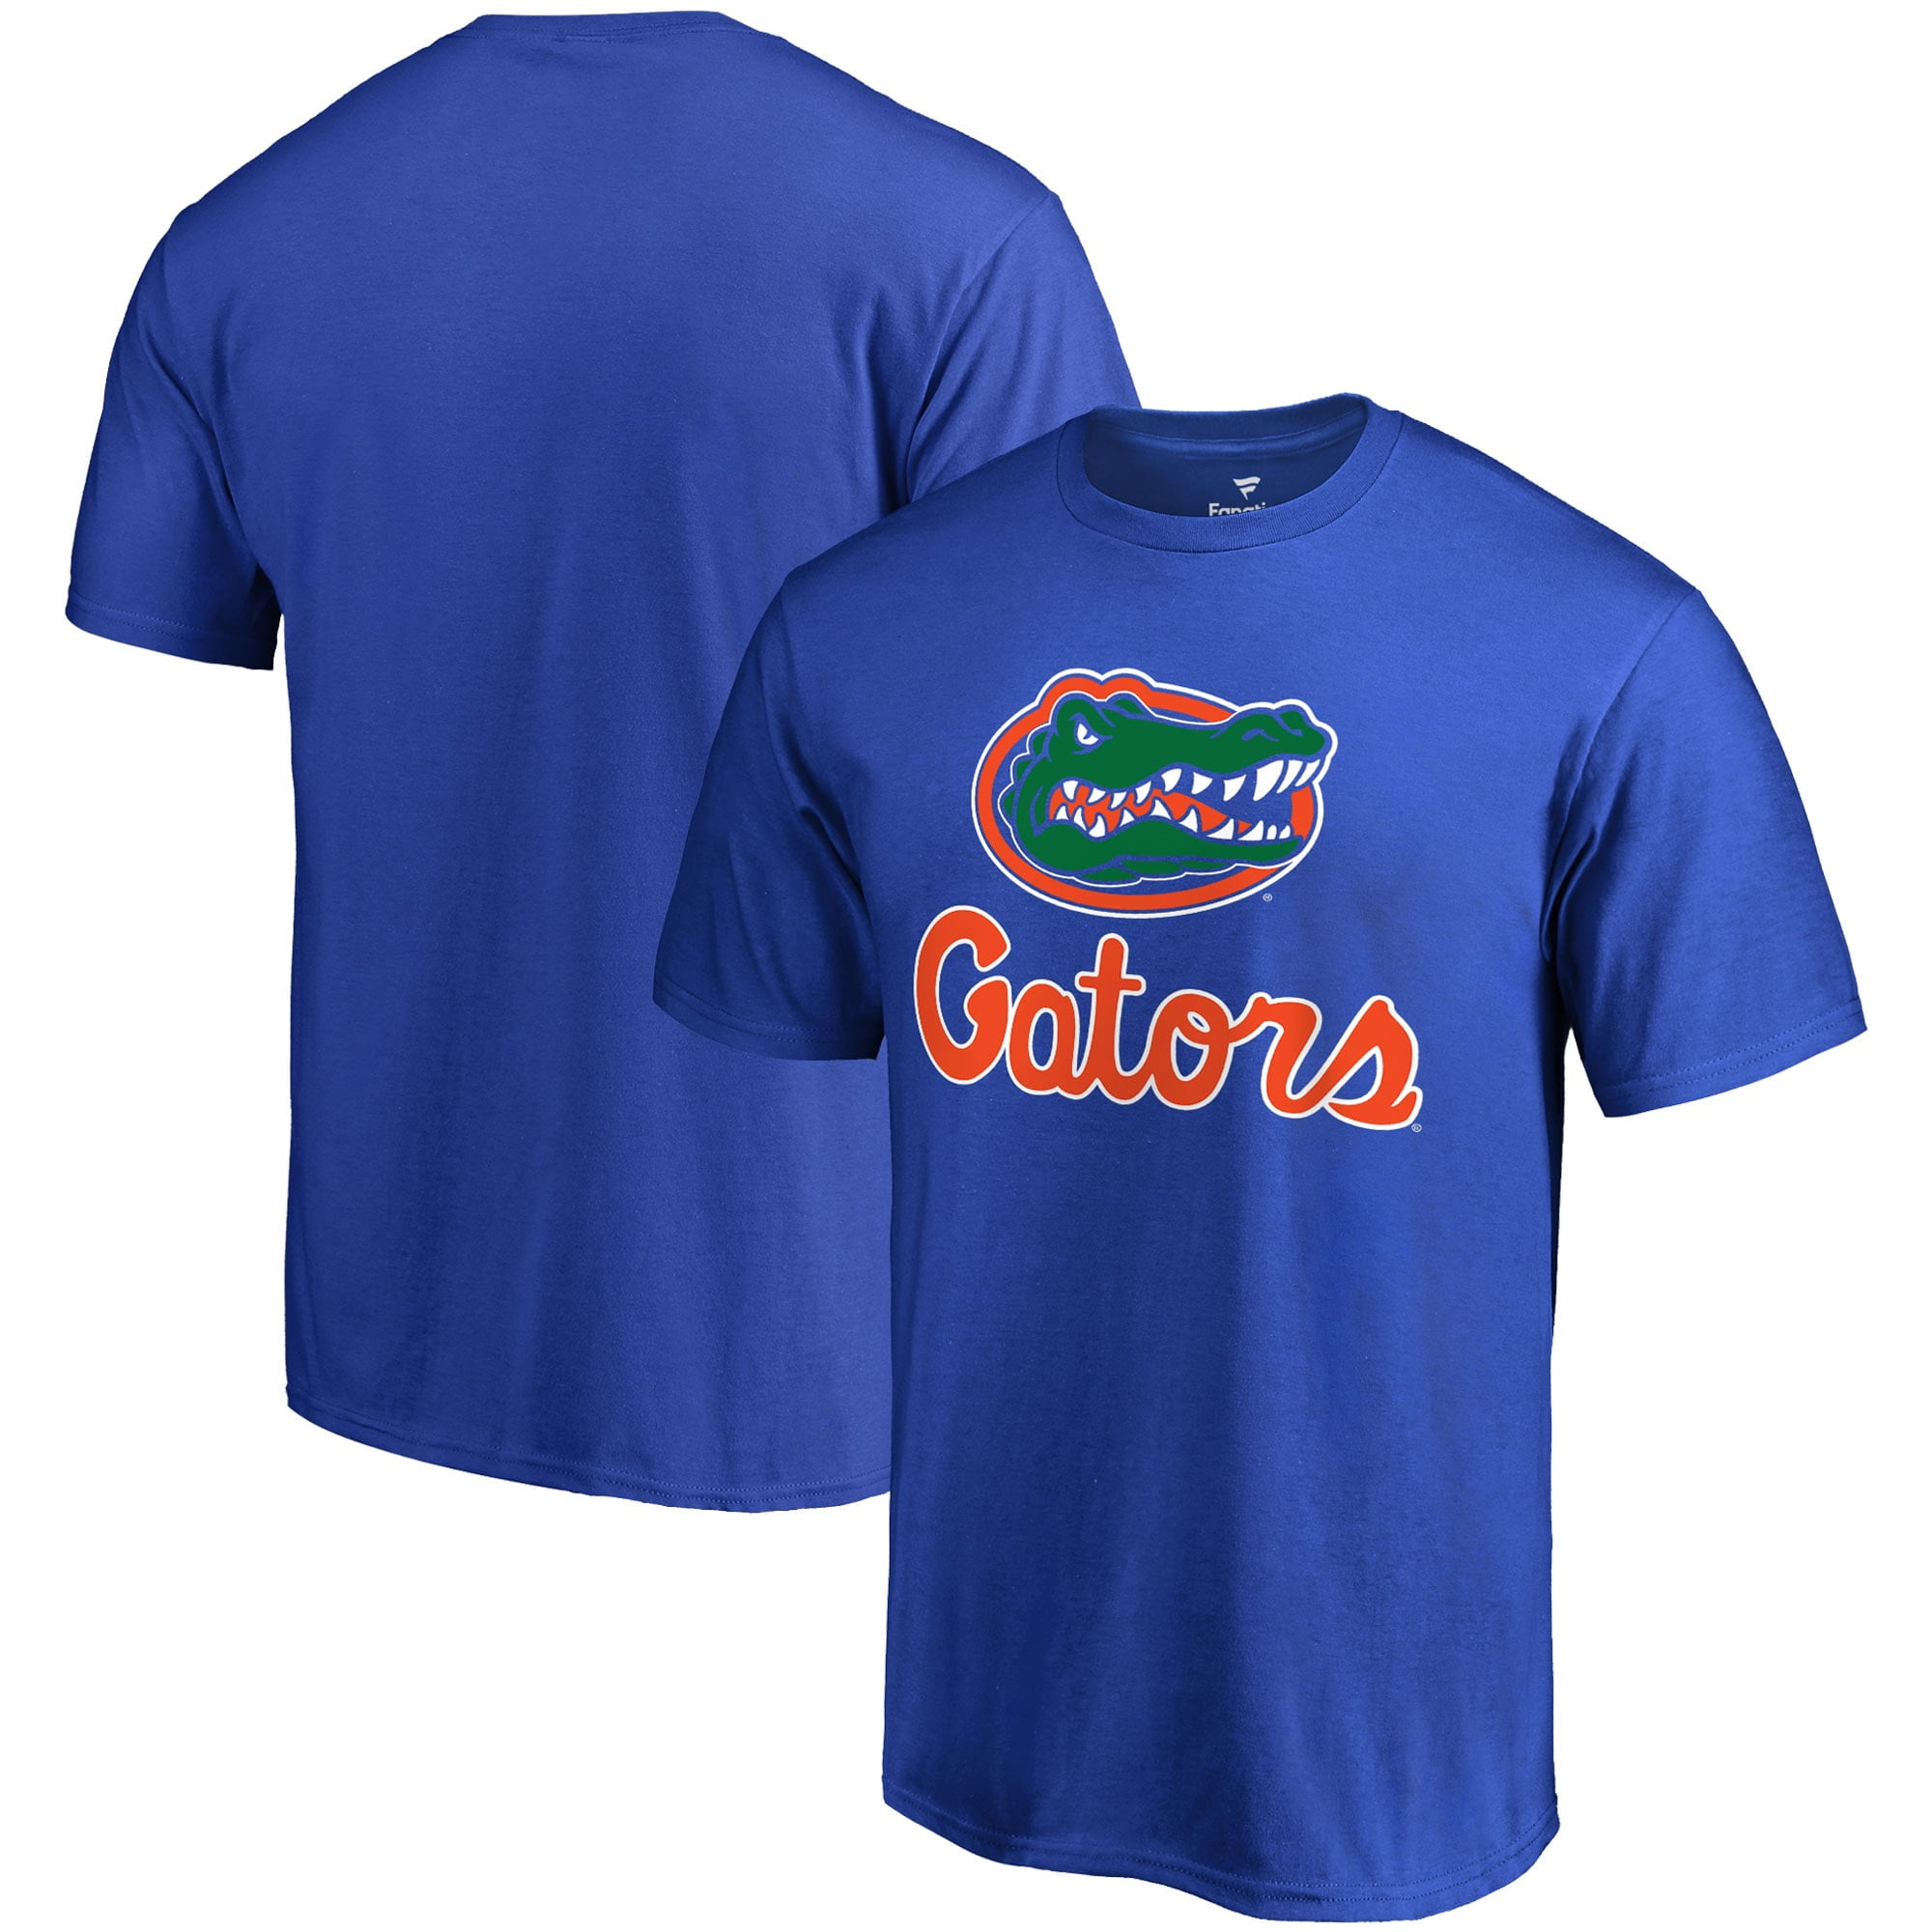 Florida Mens T Shirt Florida Sweatshirt Florida Gifts Vintage Graphic Tee Florida Pride Shirt Tee Florida Tshirt Florida Love T Shirt